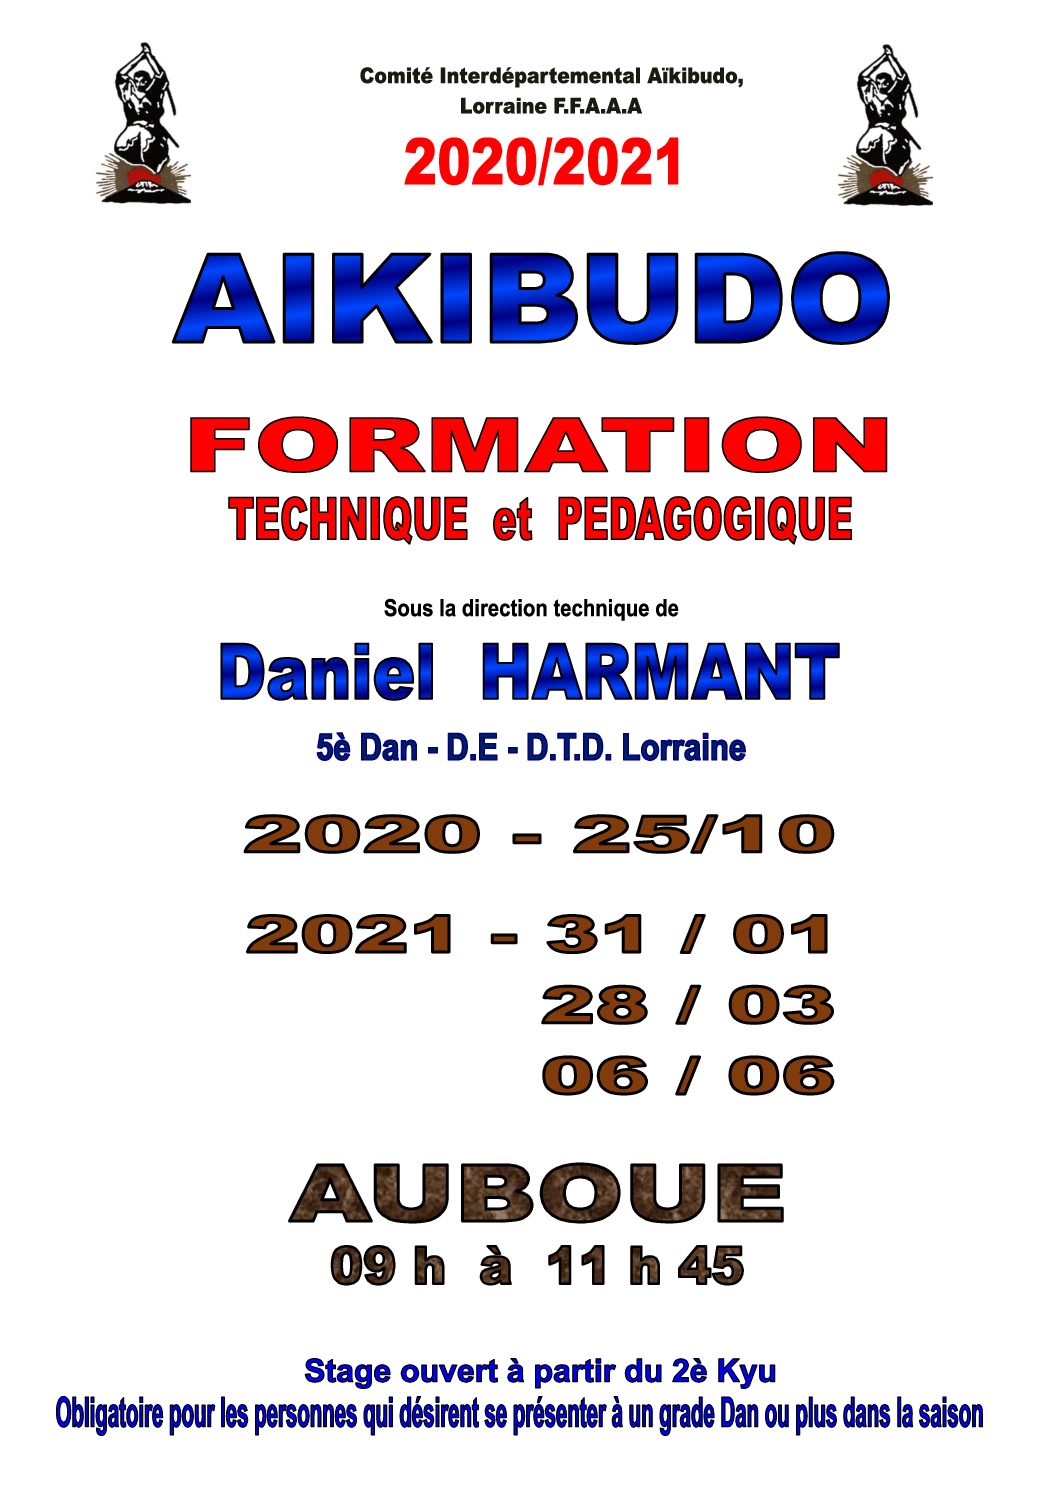 Aikibudo : Les formations